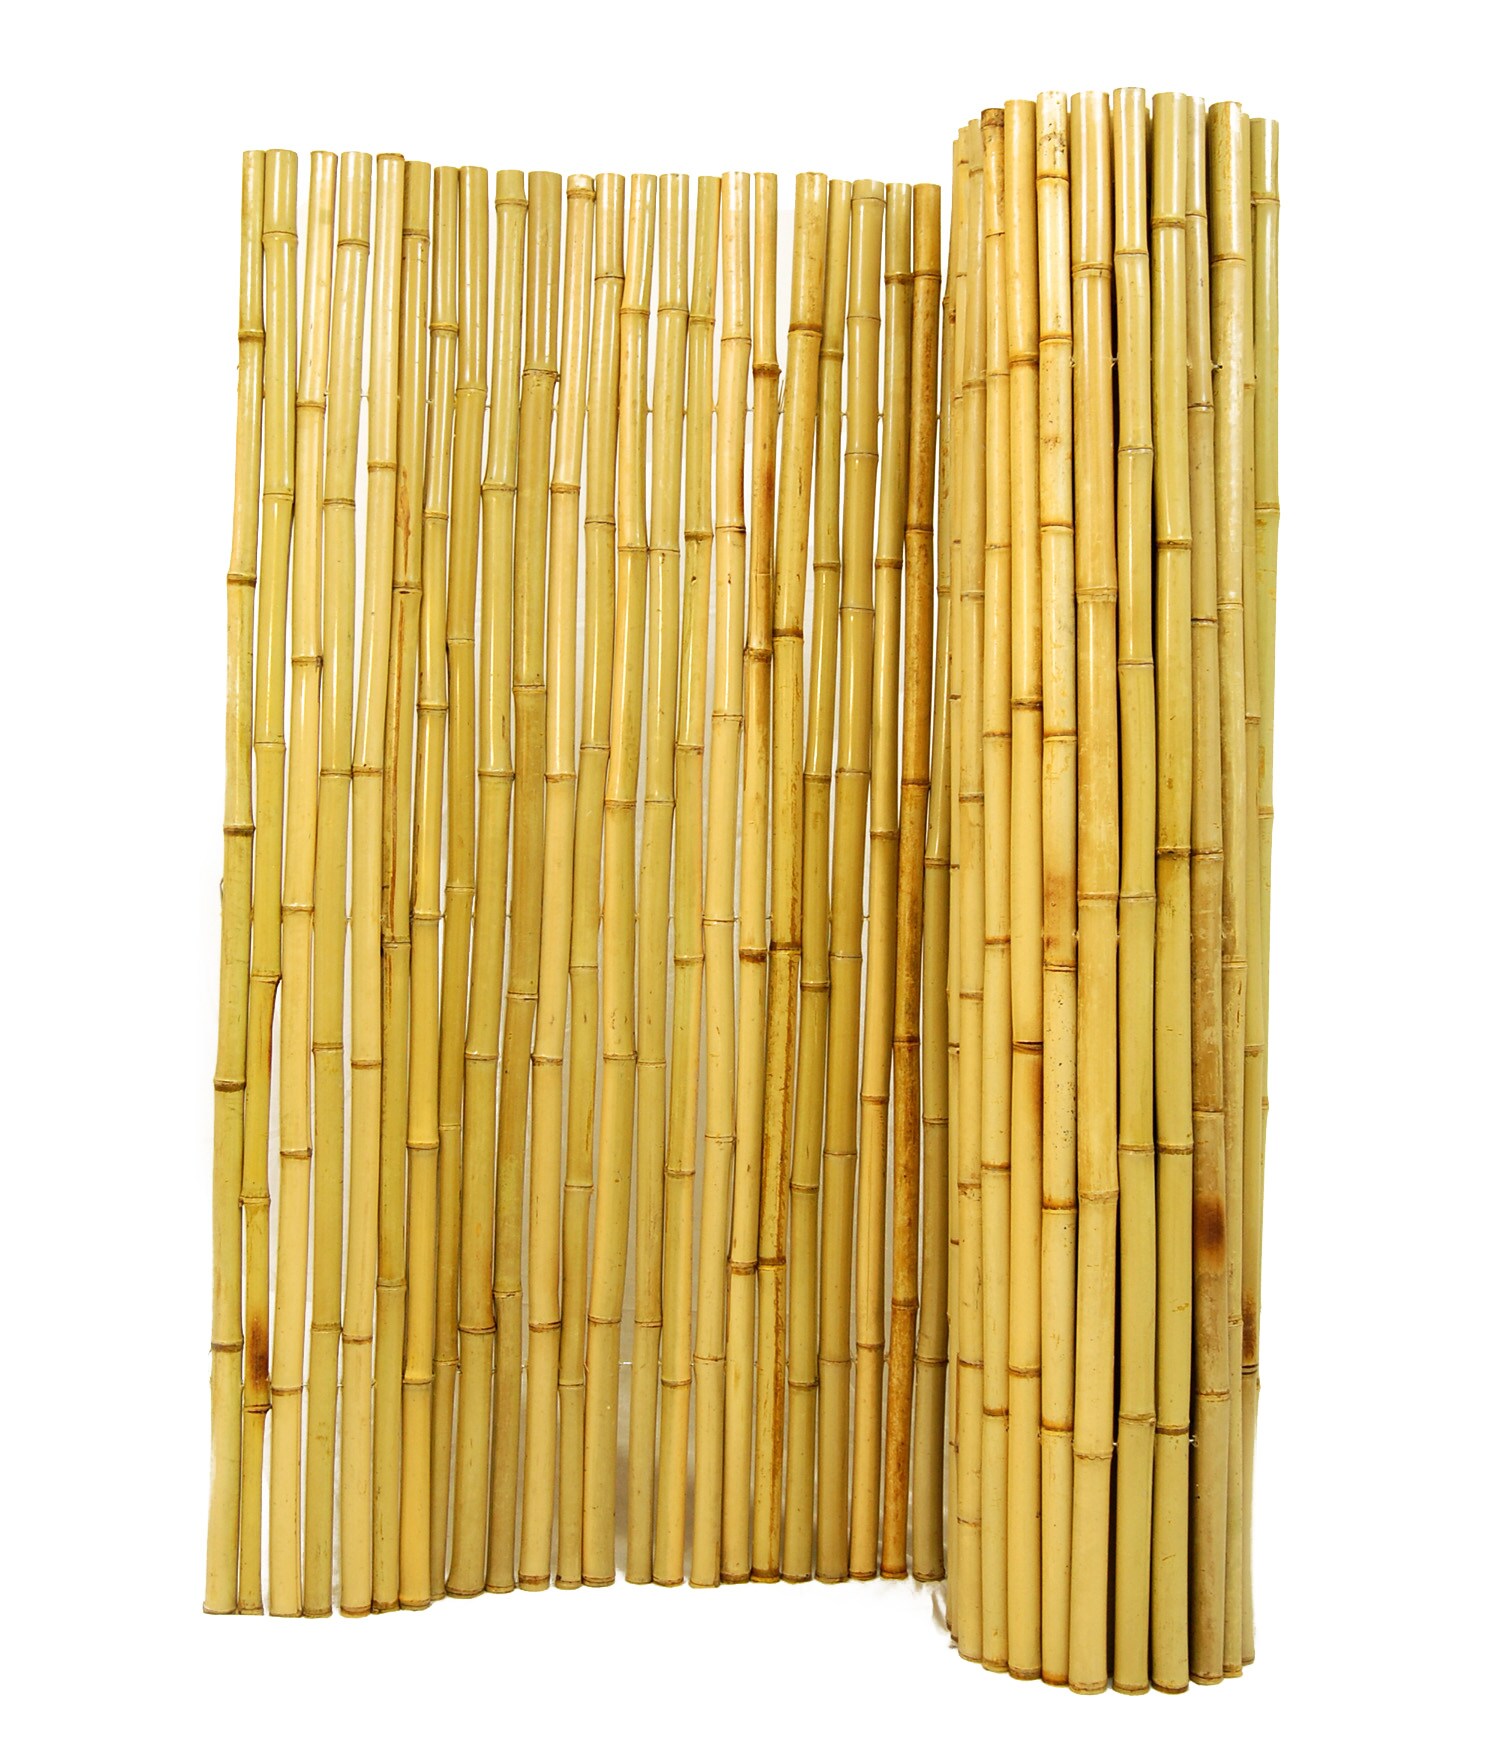 Bamboo Yellow Fence Privacy Screen PVC Windscreen Shade Panel Garden/Balco 